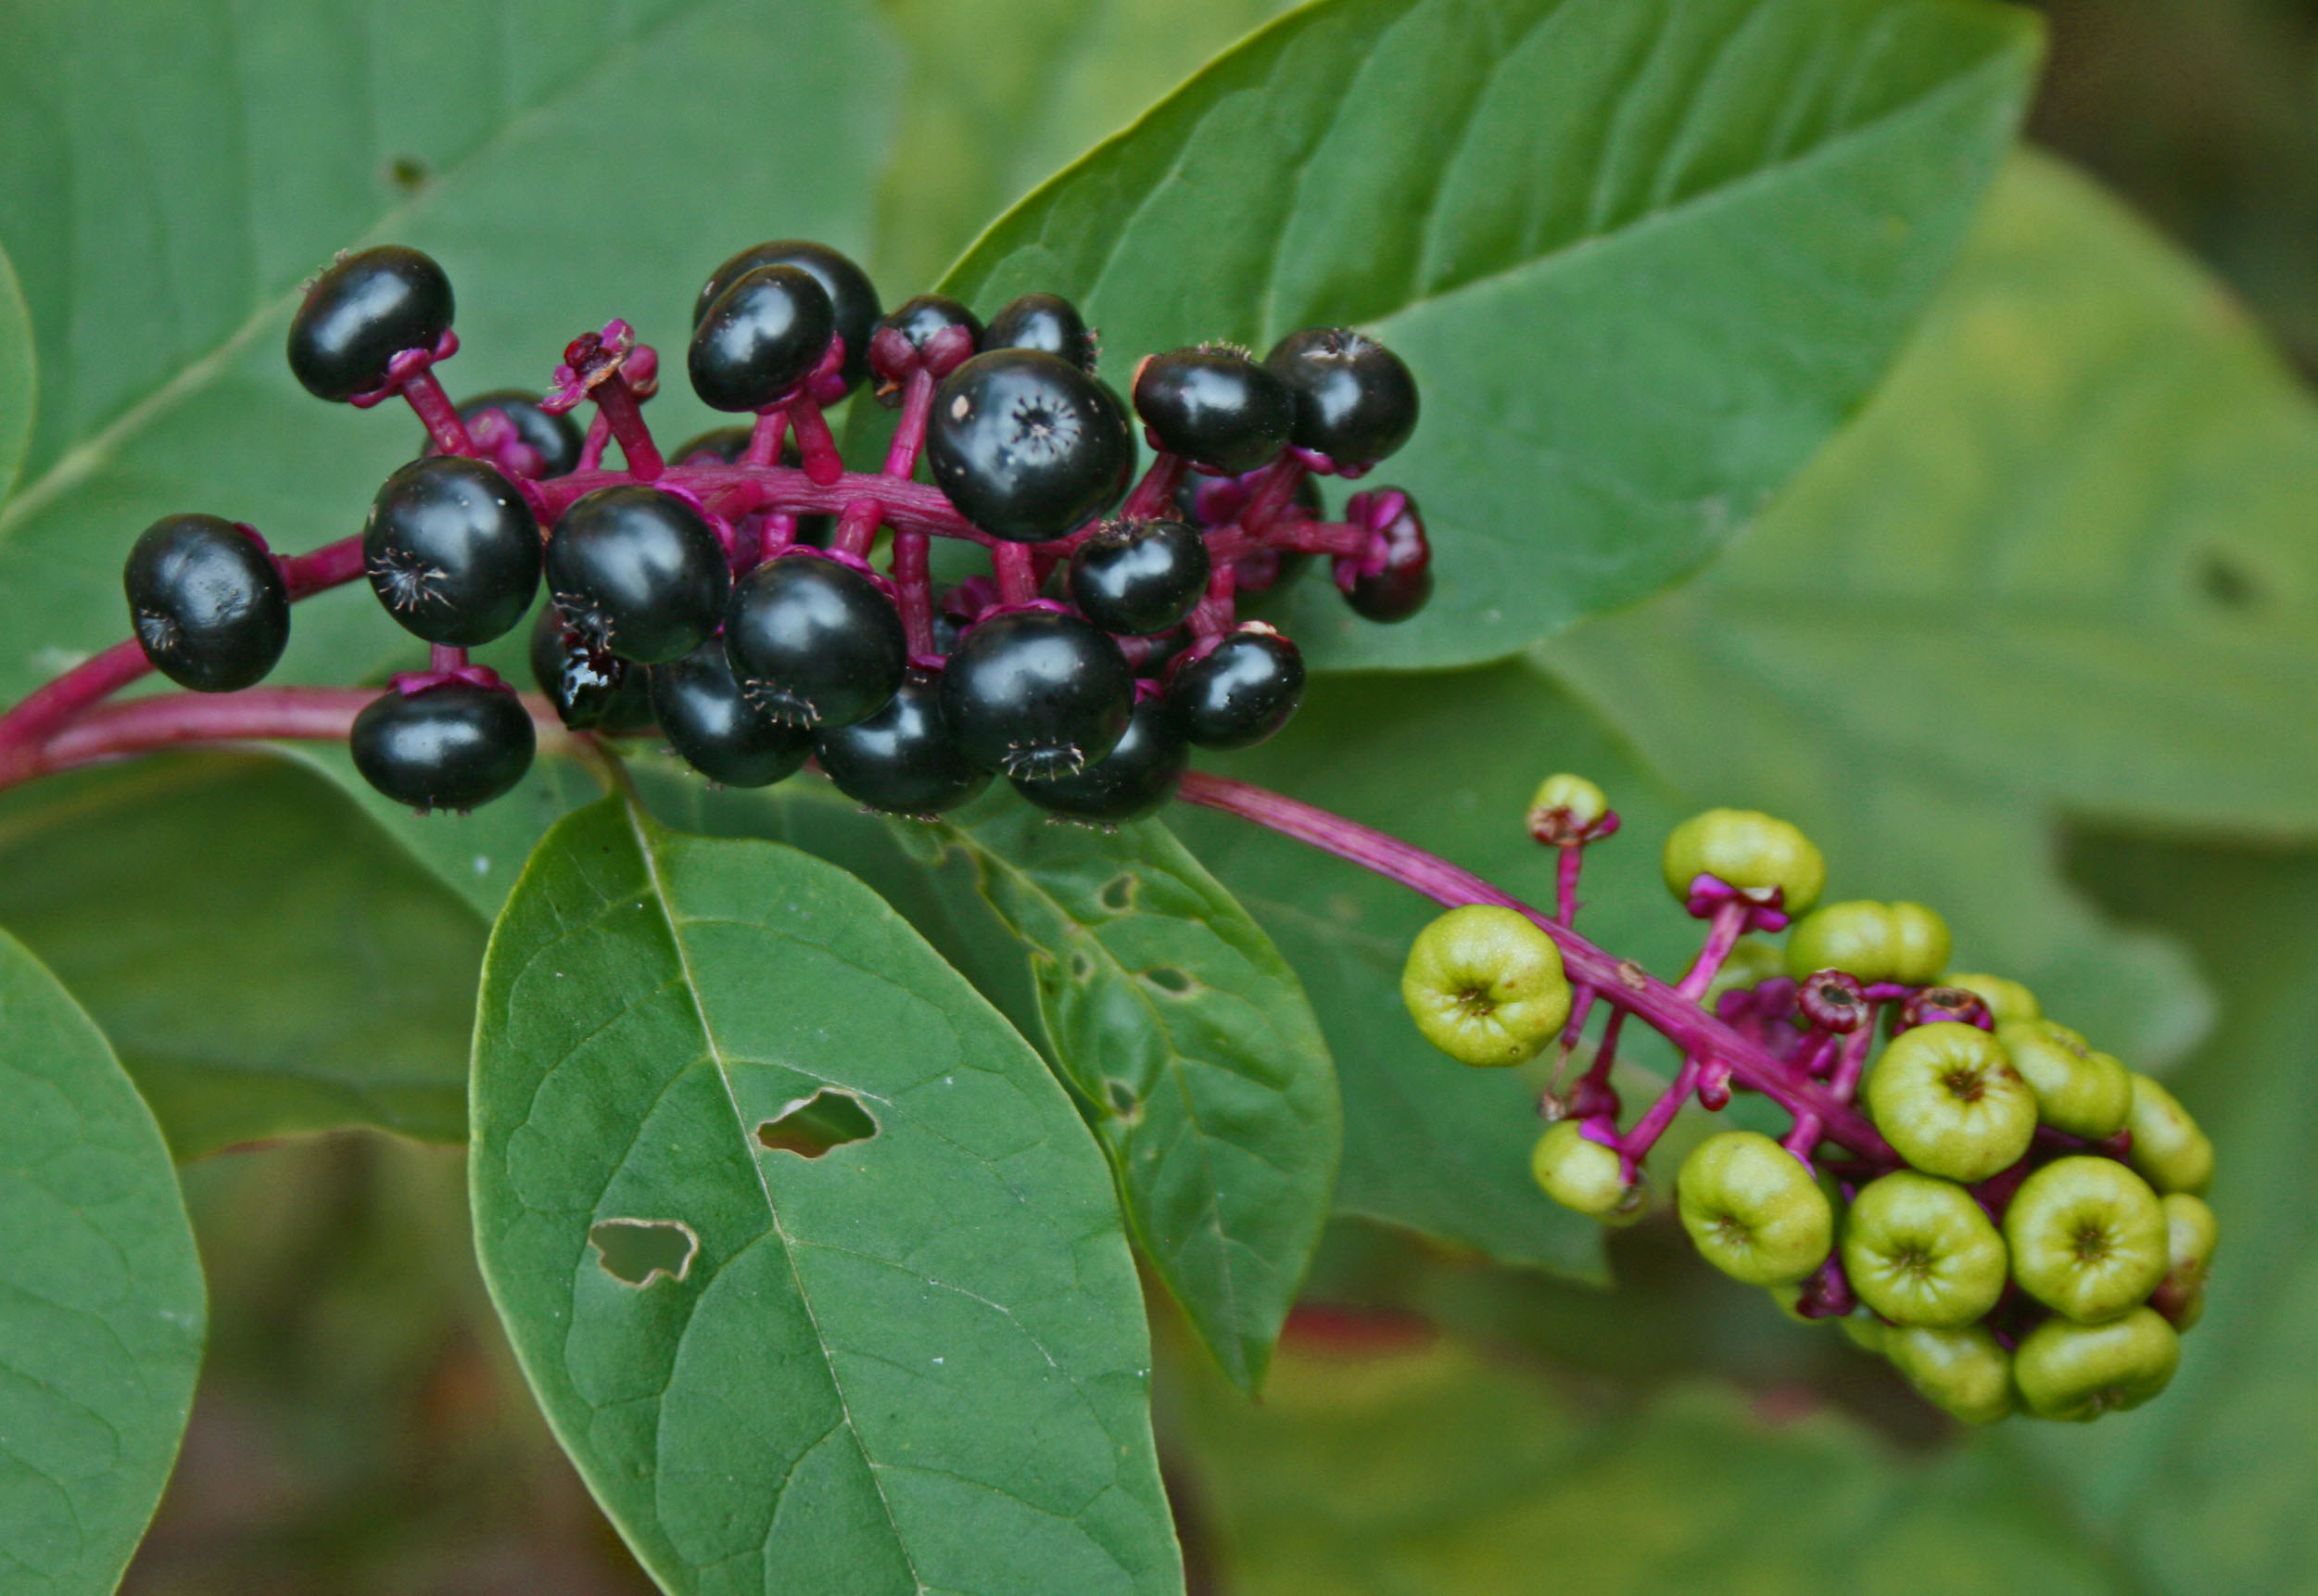 Pods of Ripe and Unripe Poke Berries In Woodlot tb0912yvr.jpg